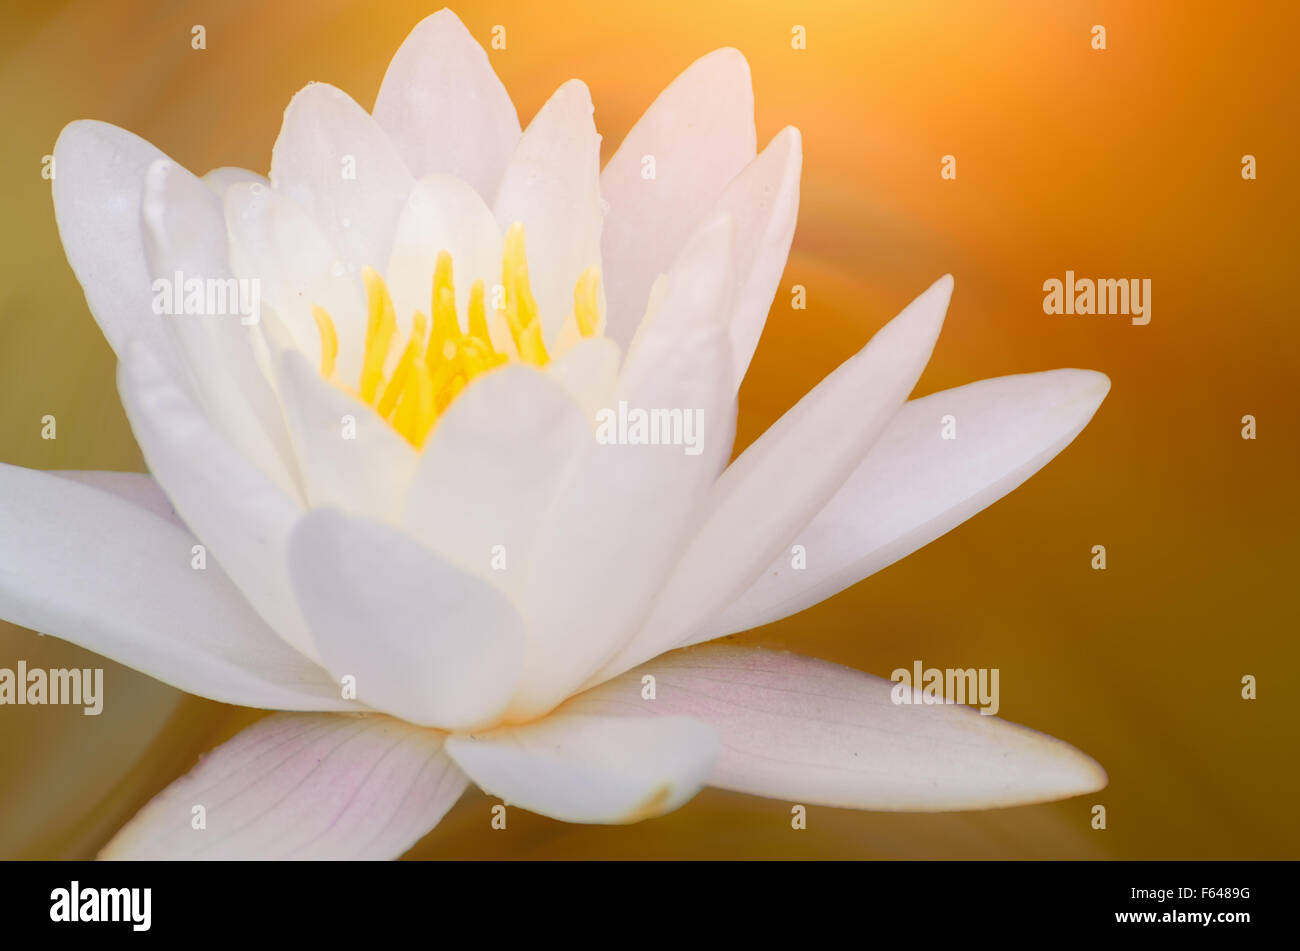 Closeup on lotus petal with copyspace Stock Photo